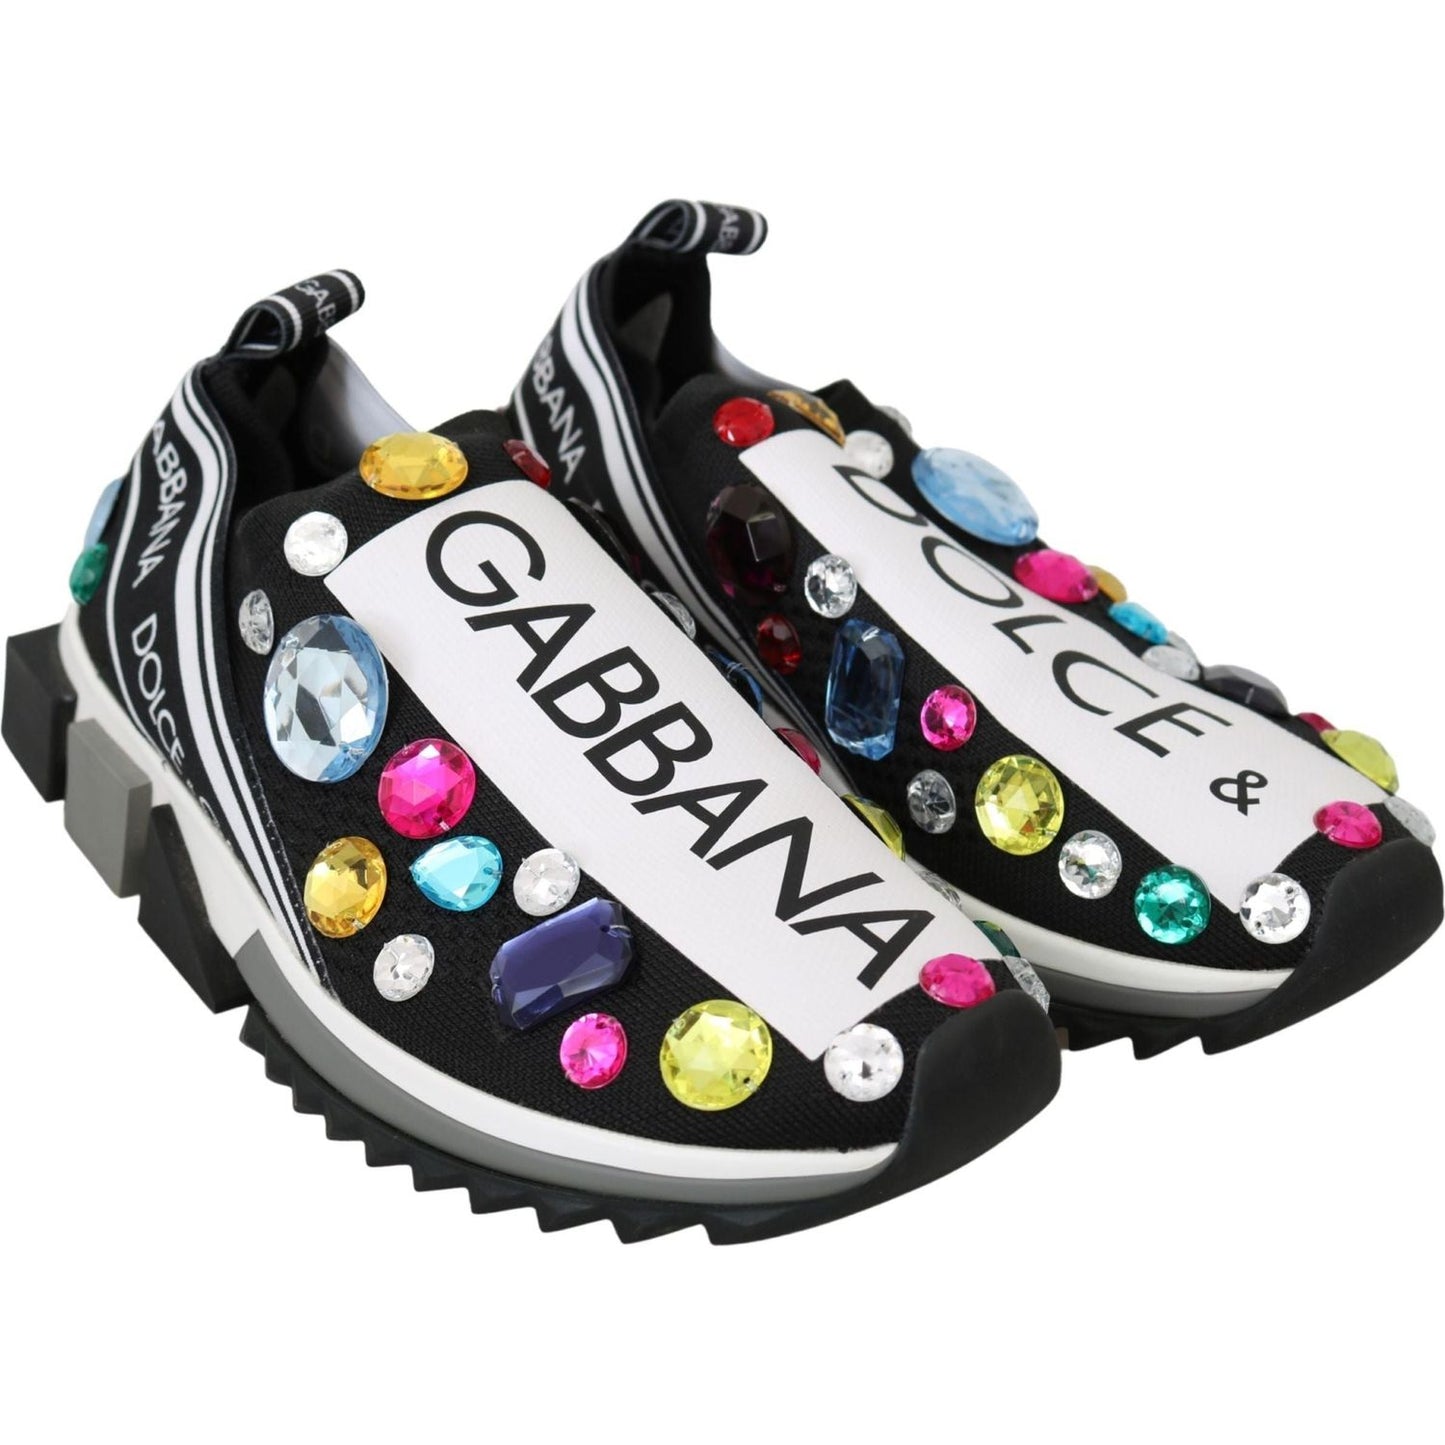 Dolce & Gabbana Black Crystal-Embellished Low Top Sneakers black-multicolor-crystal-sneakers-shoes